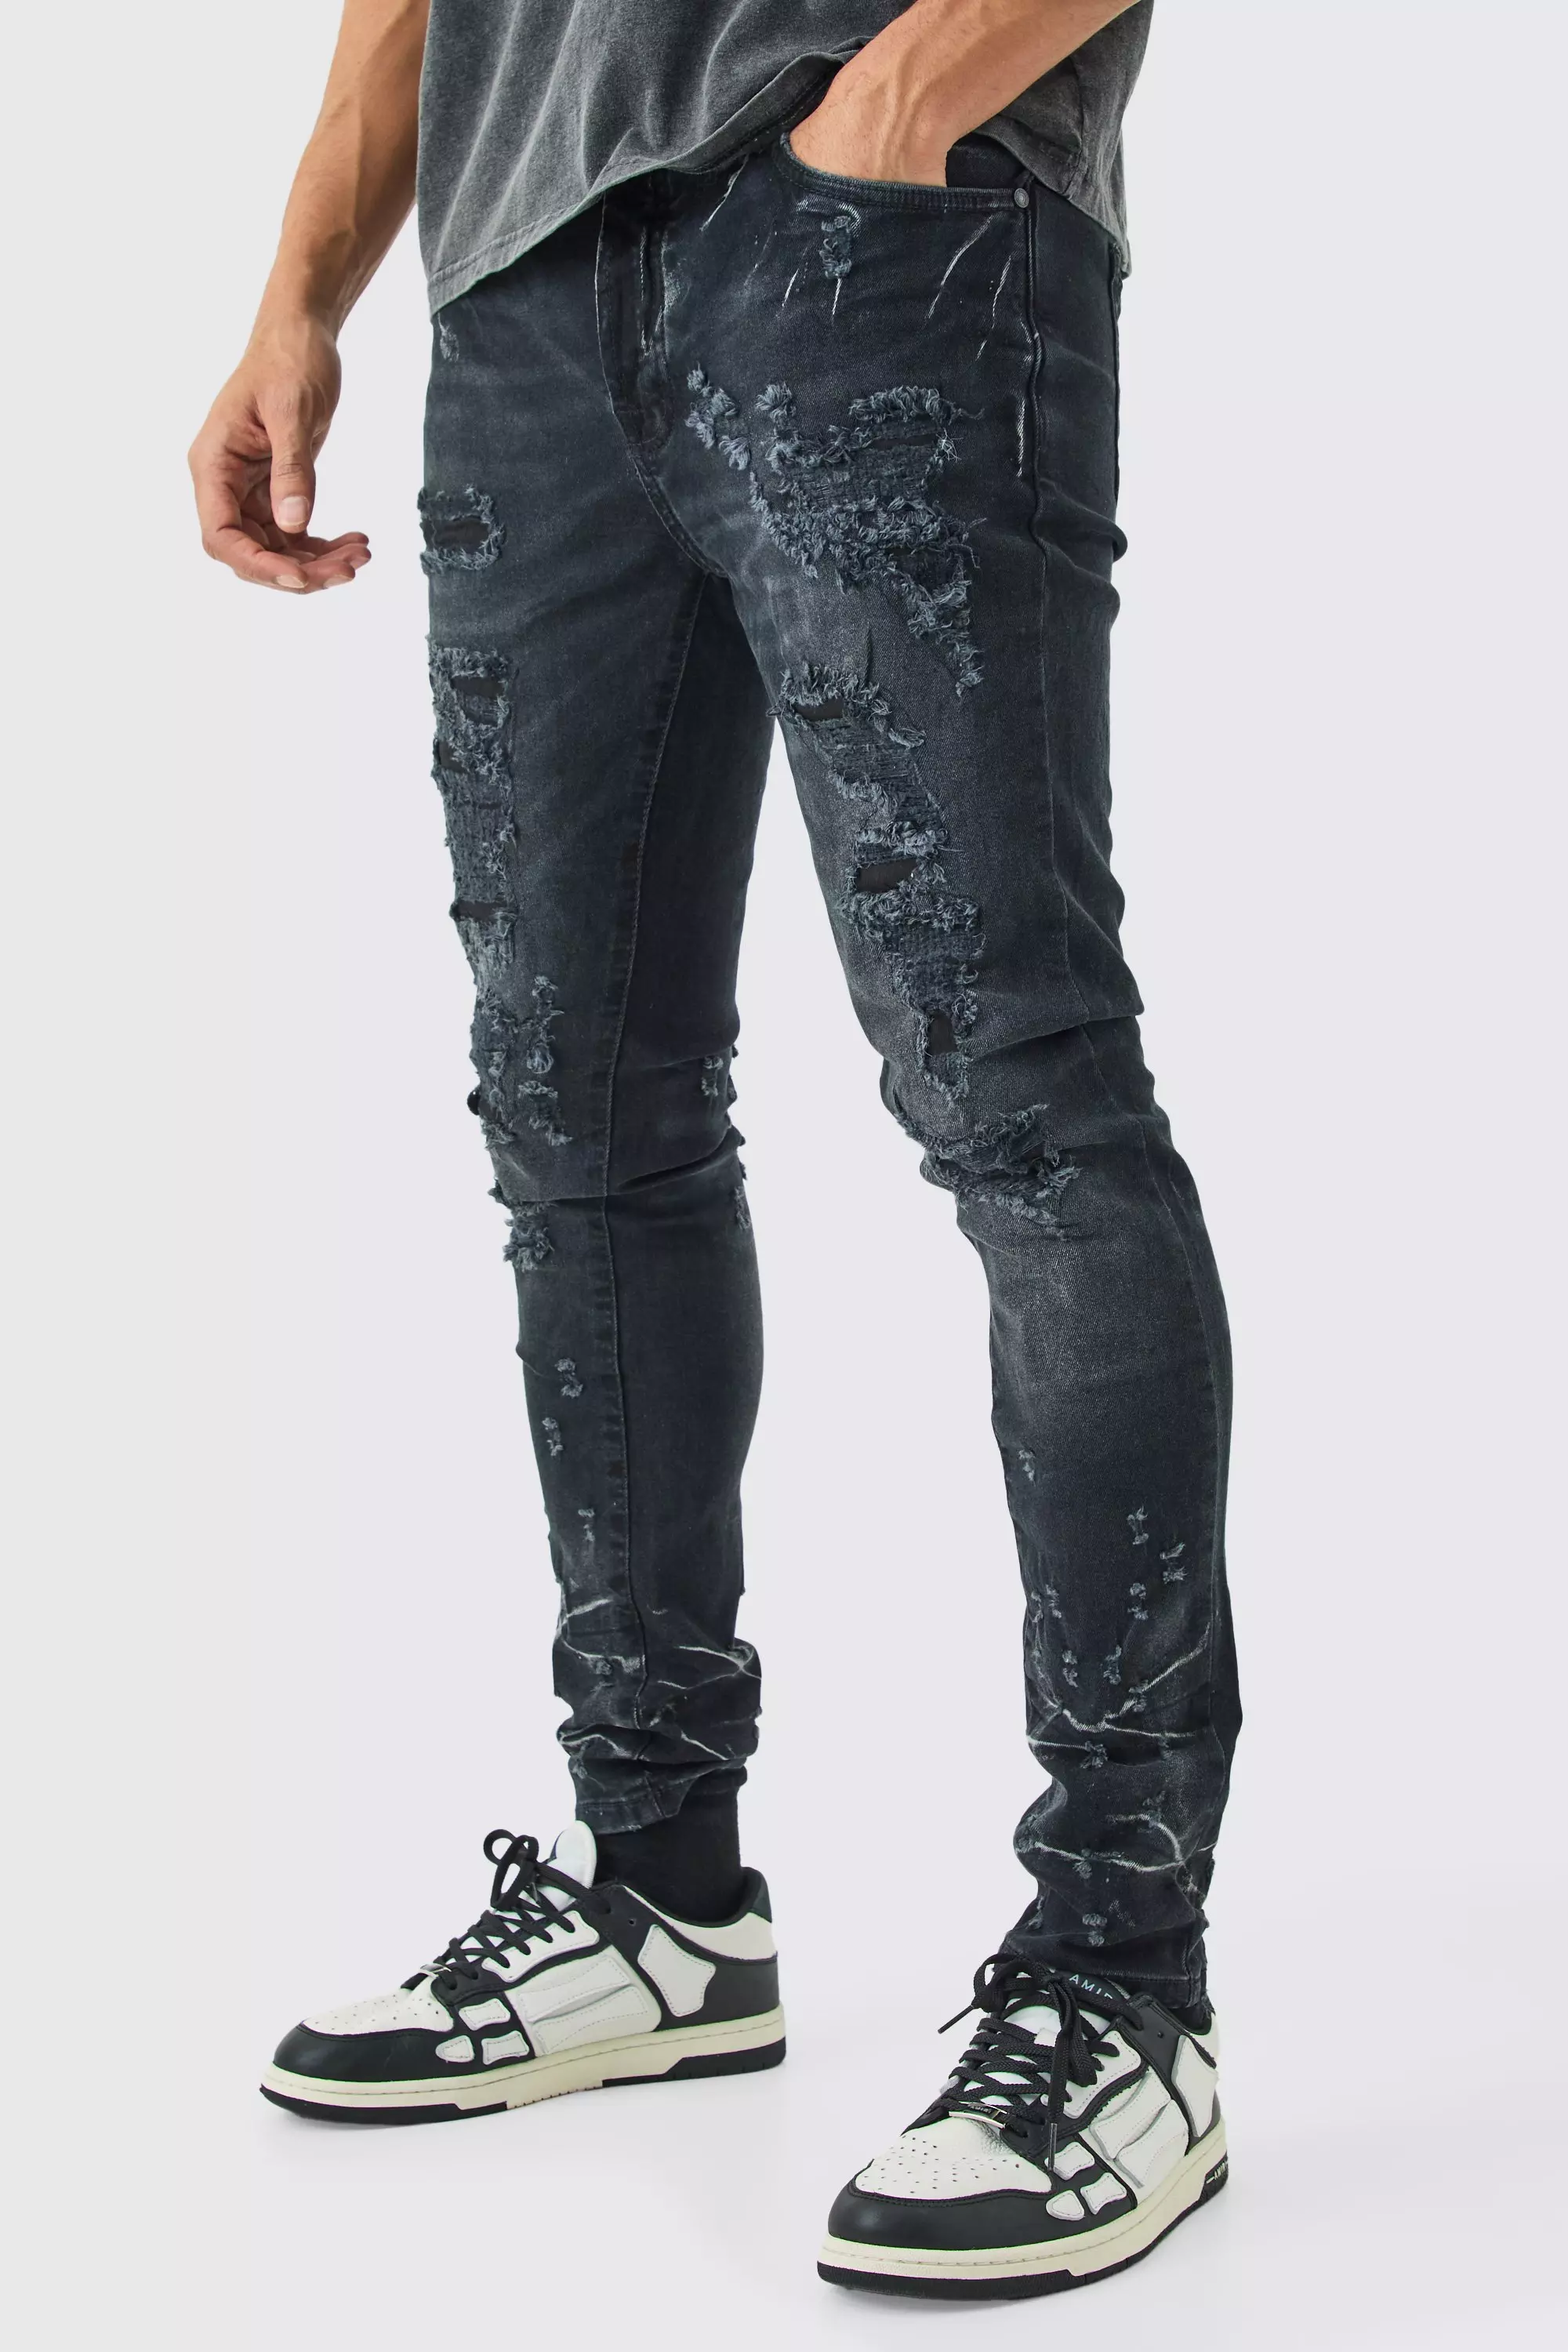 Men's Black Jeans: Shop Black Ripped Jeans & More